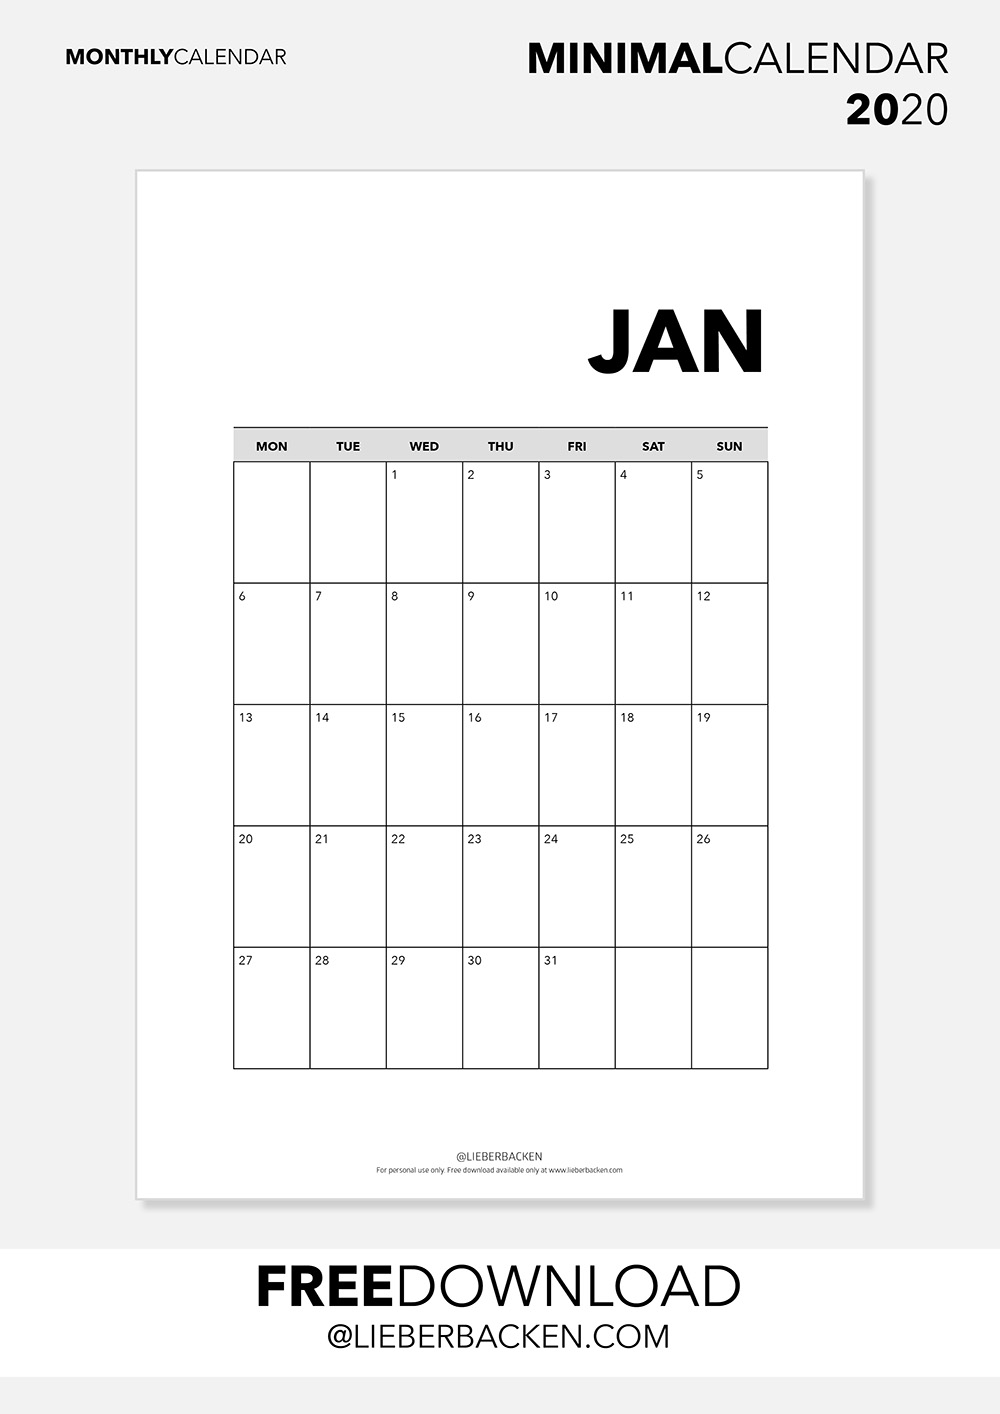 Monthly Overview - Free Printable Calender 2020 | Gratis Download Kalender 2020